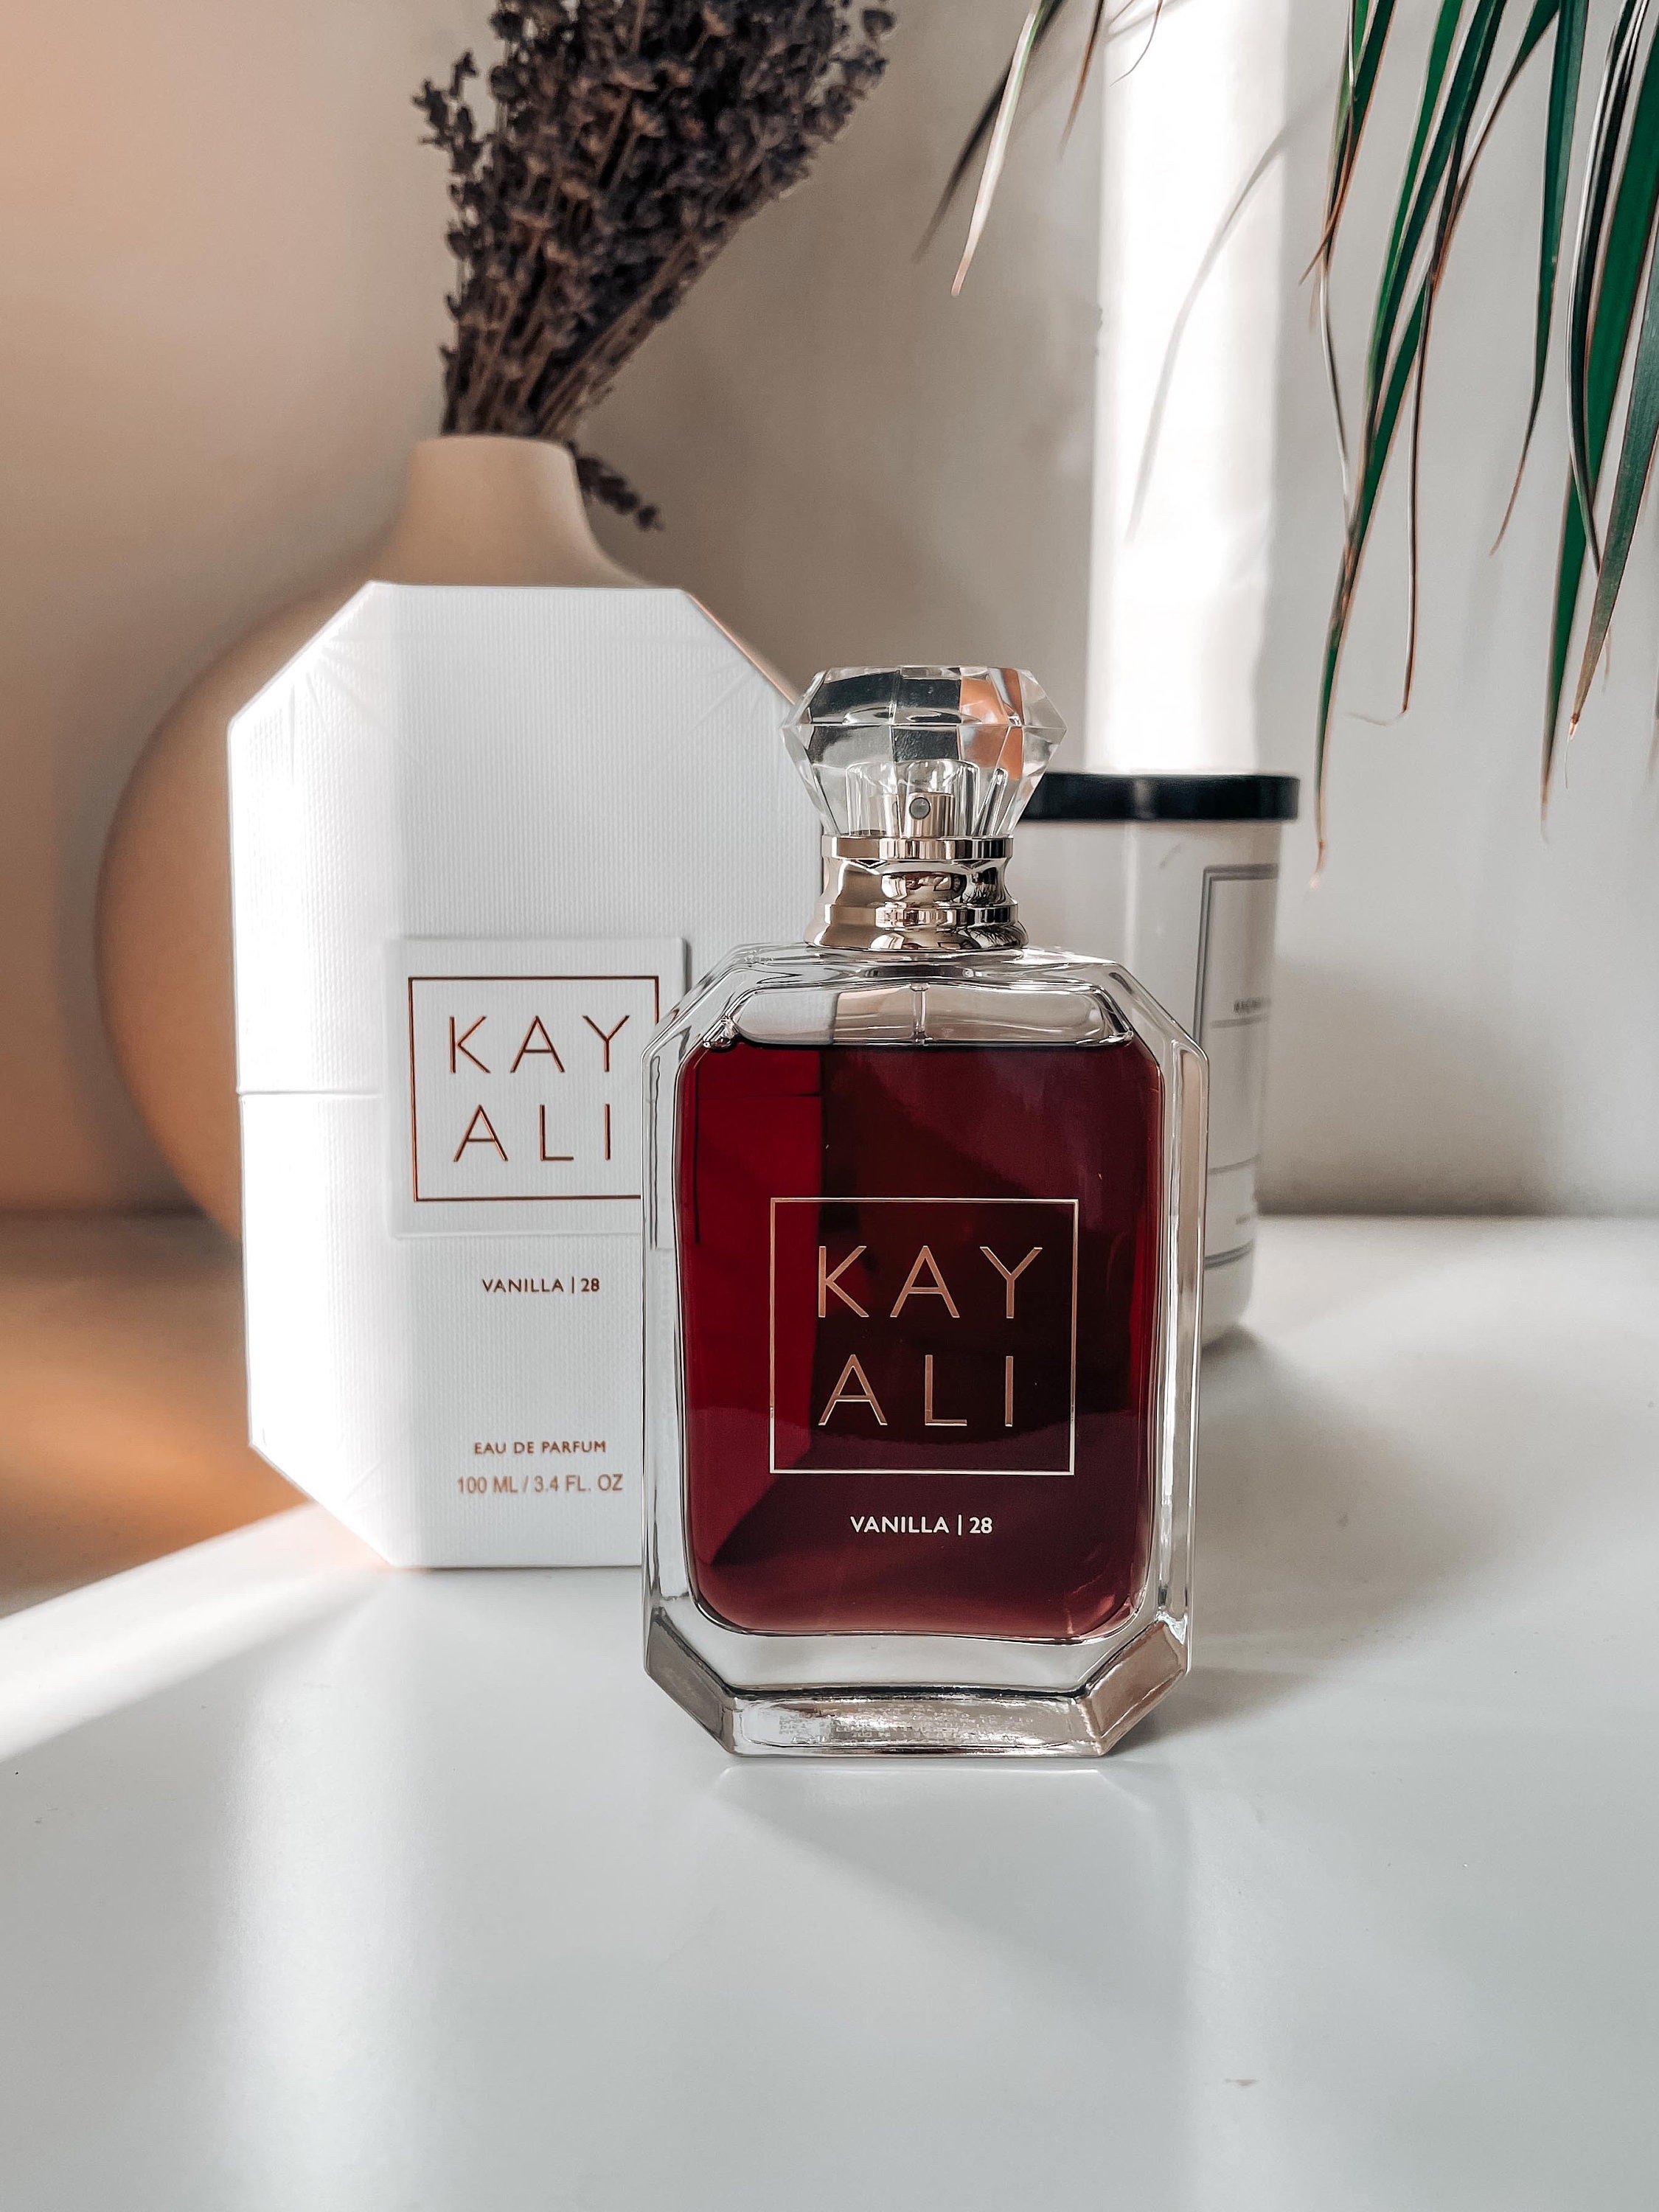 Kayali Vanilla 28 DECANTER Perfume Huda Beauty Sample Atomiser 